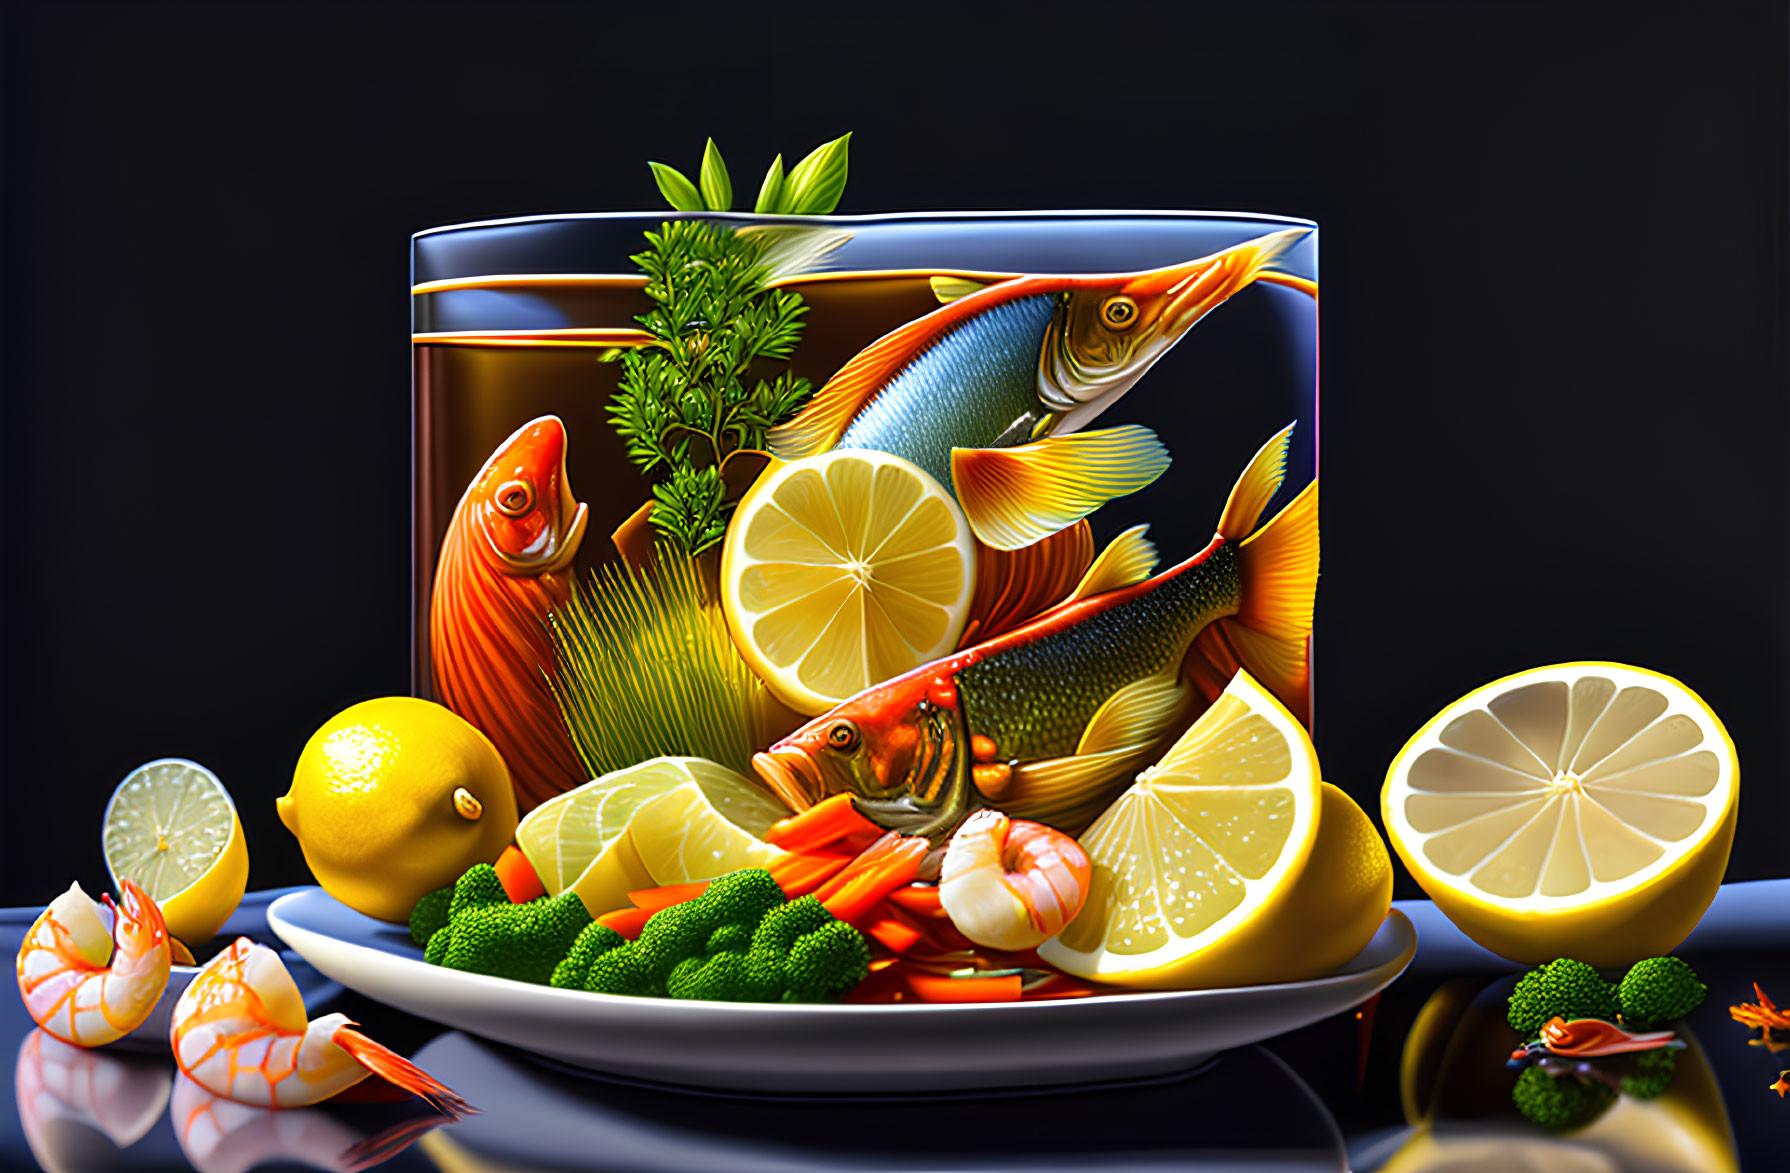 Colorful Fishbowl Illustration with Lemon, Shrimps, and Plants